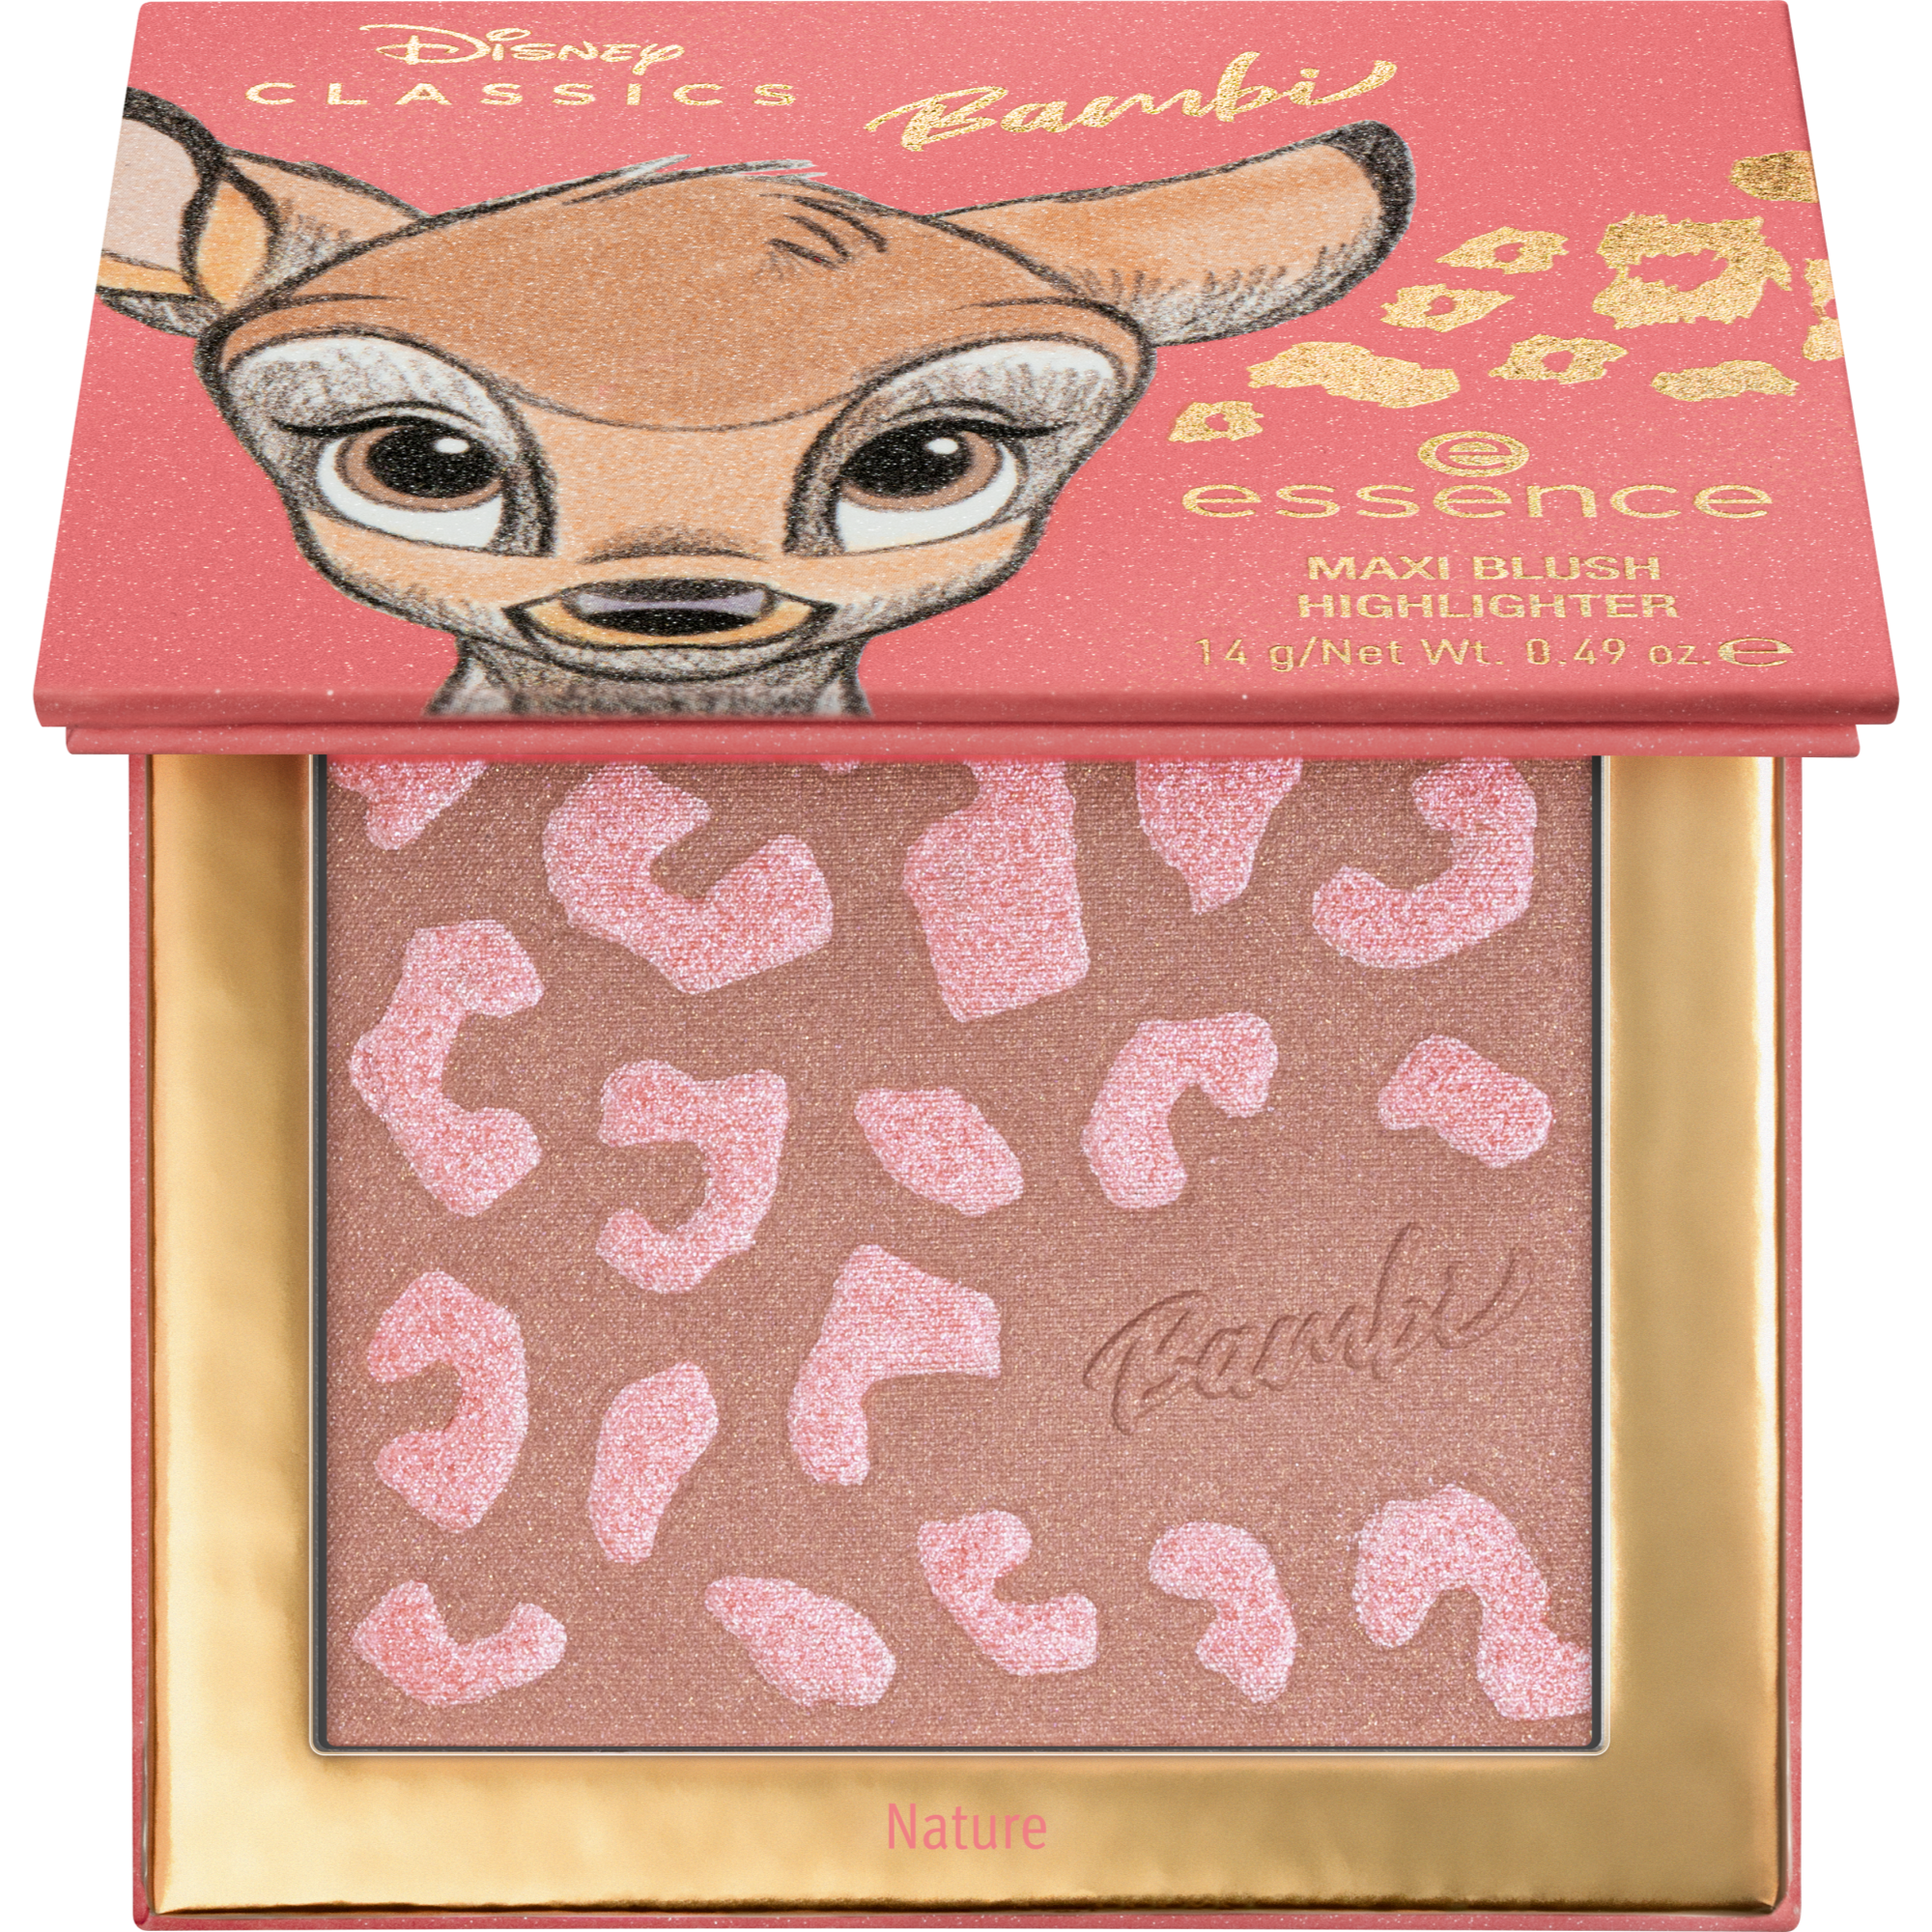 Disney Classics Bambi maxi blush highlighter